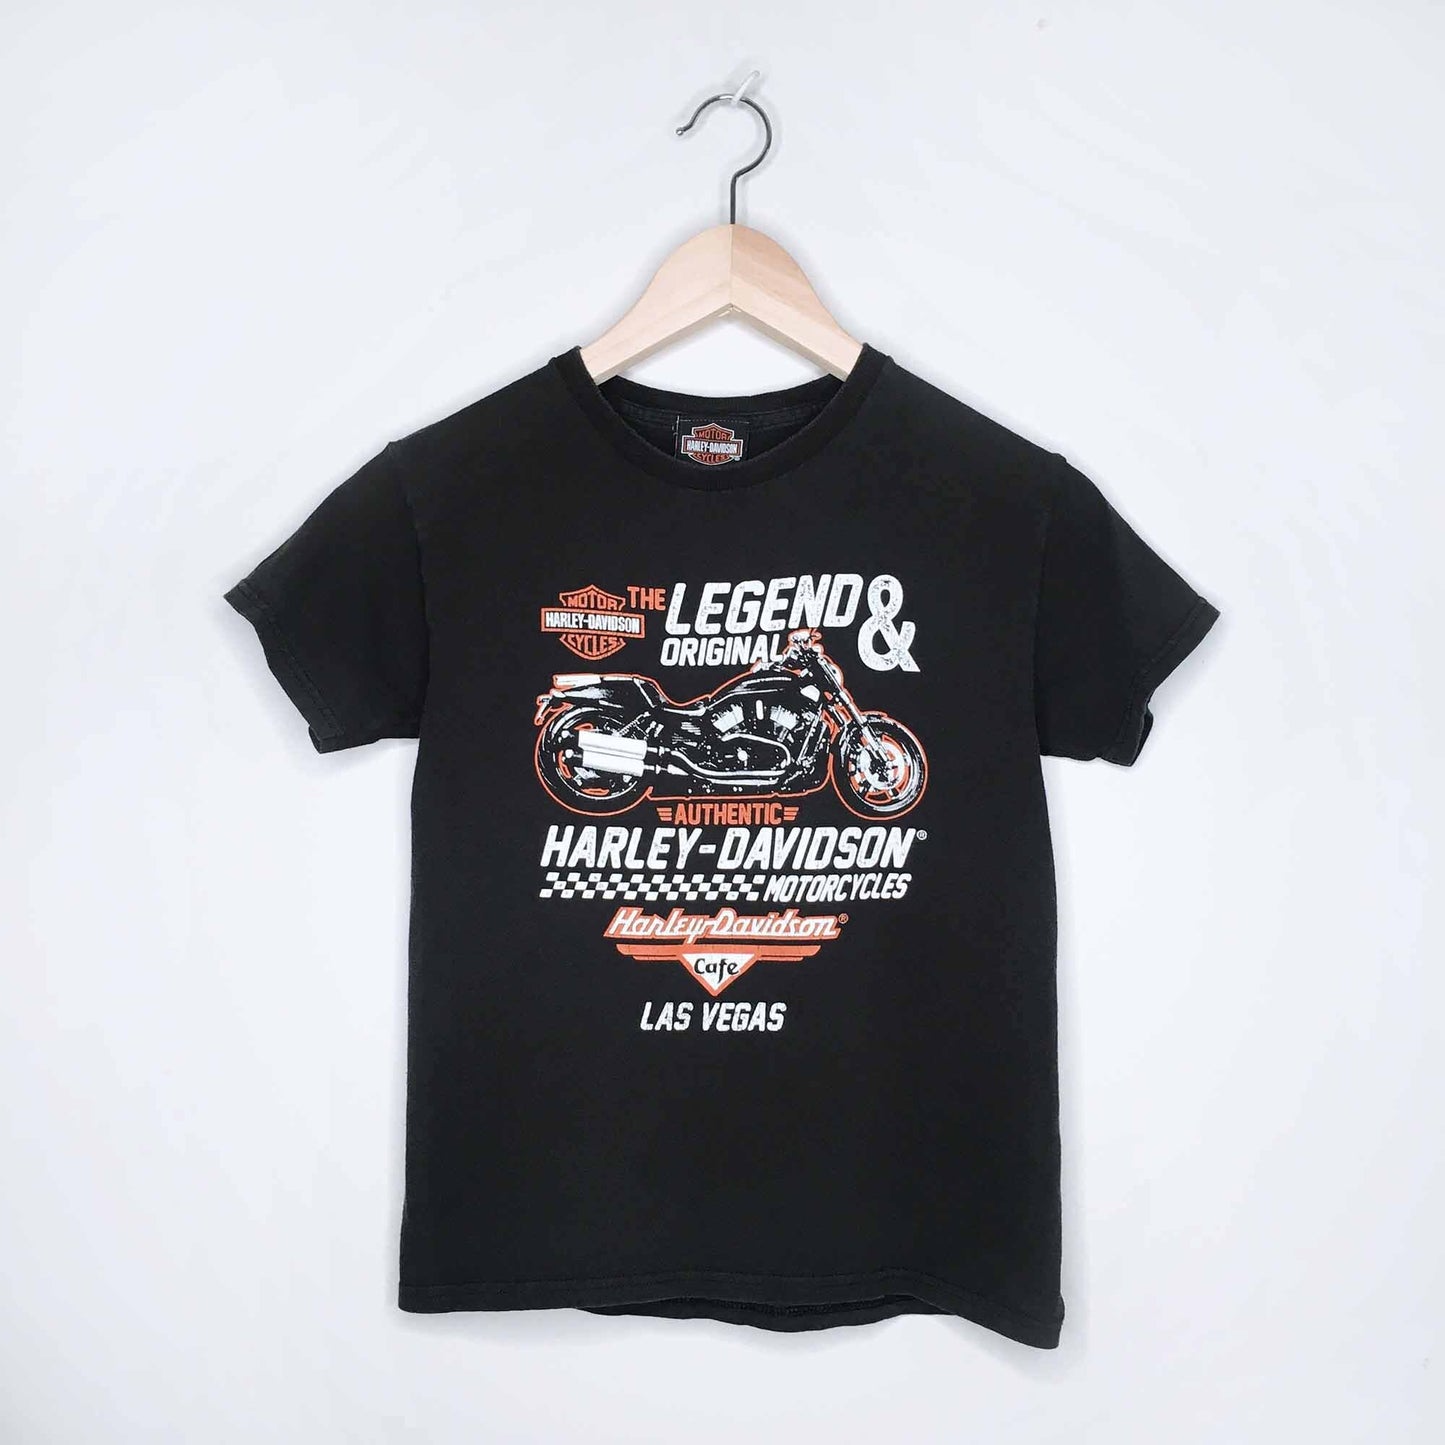 Vintage kids Harley Davidson t-shirt - size Youth Medium